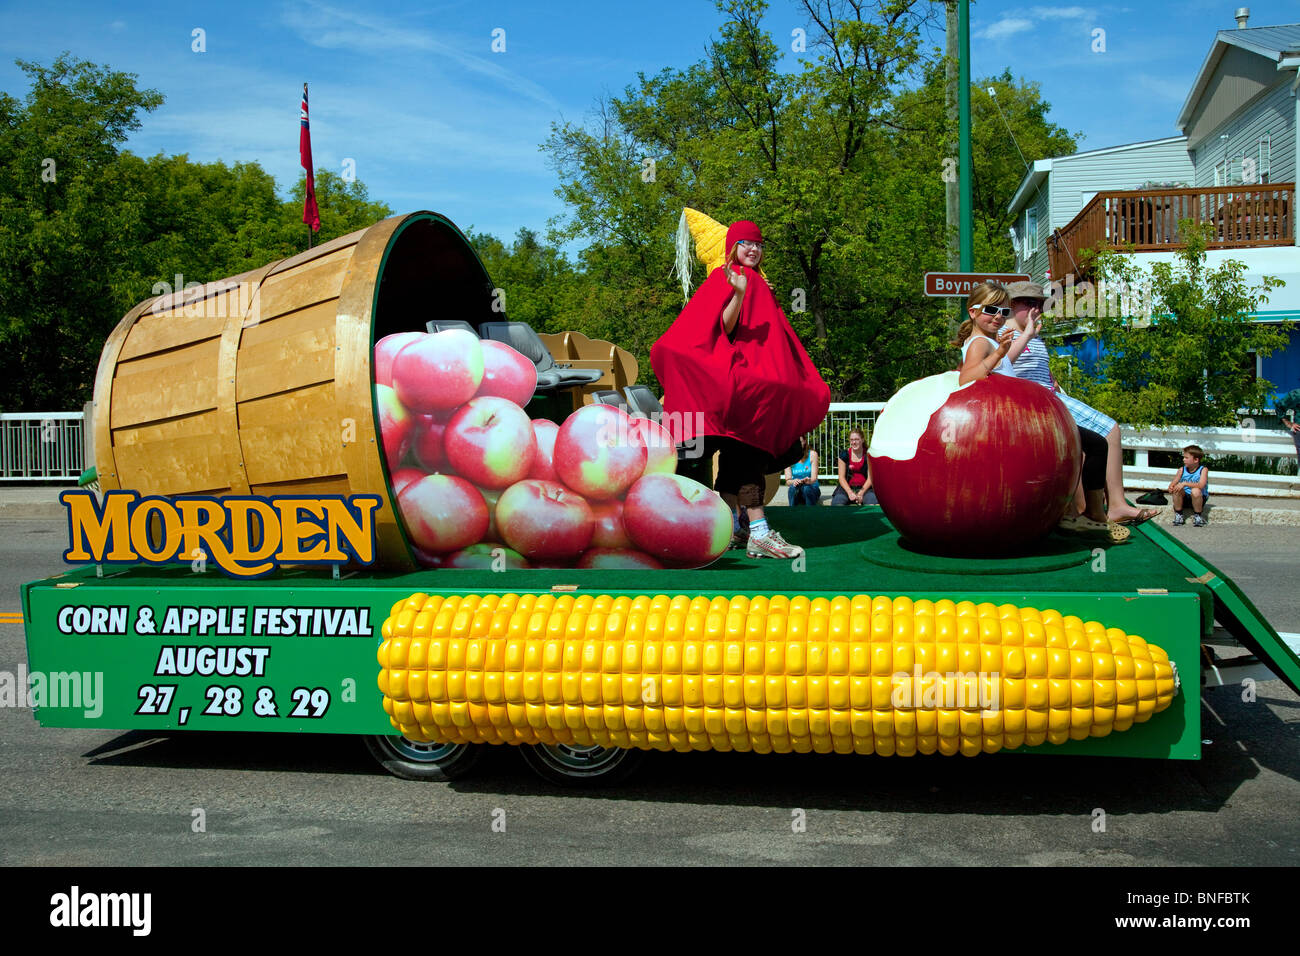 The Morden Corn and Apple Festival parade float in the Carmen, Manitoba